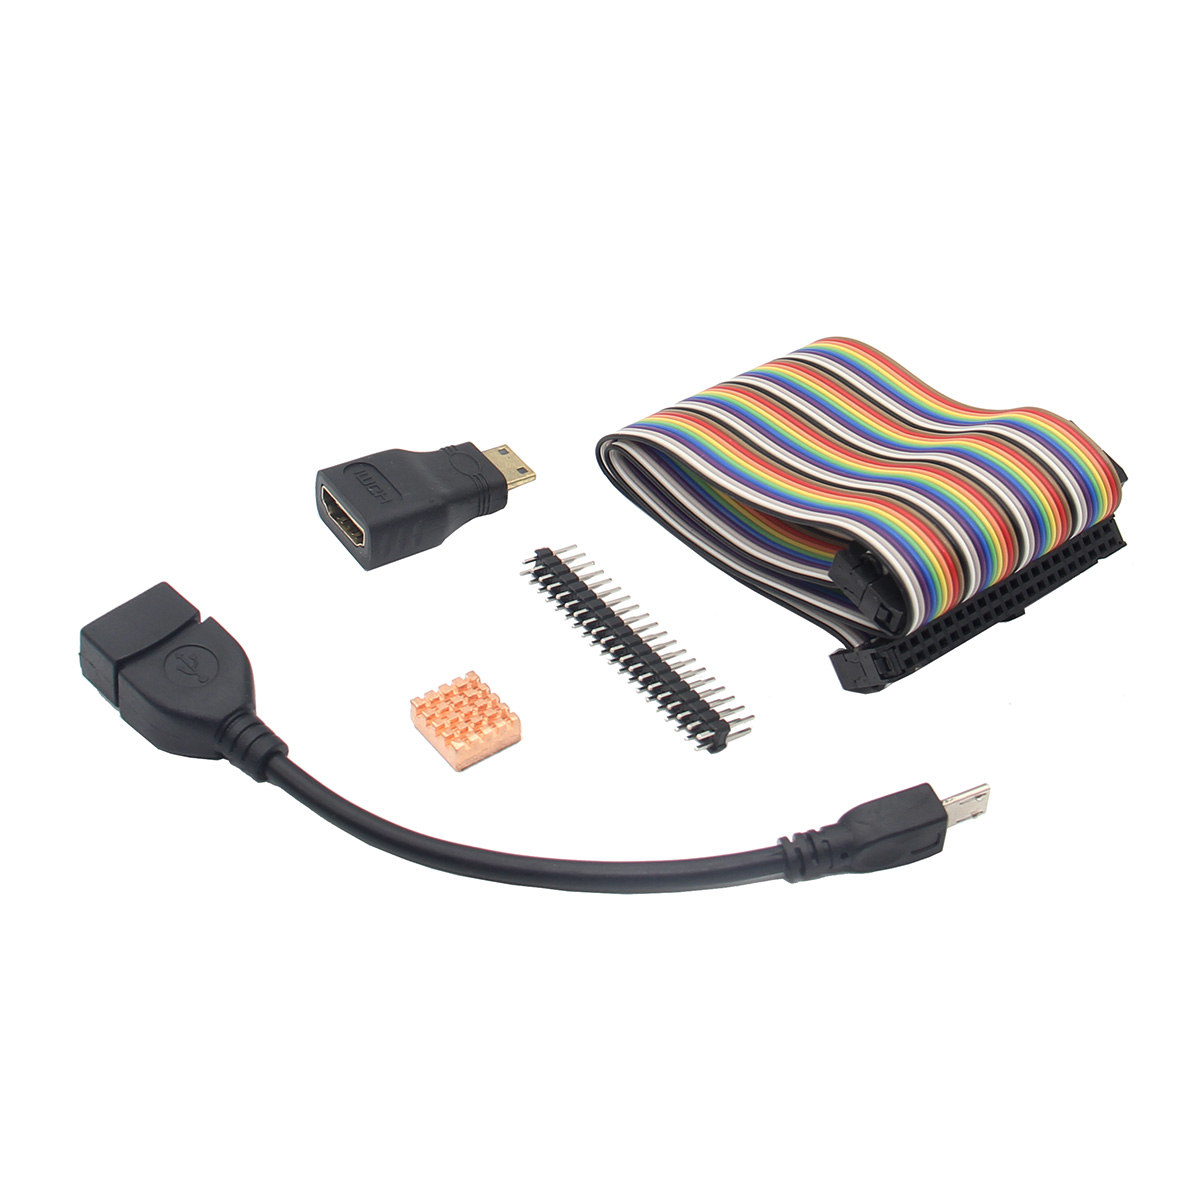 5-in-1 GPIO Cable + USB OTG Cable + Mini HDMI to HDMI Adapter + 2x20 Pin Header + Heat Sink Base Kit For Raspberry Pi Zero / Raspberry Pi Zero W. 8